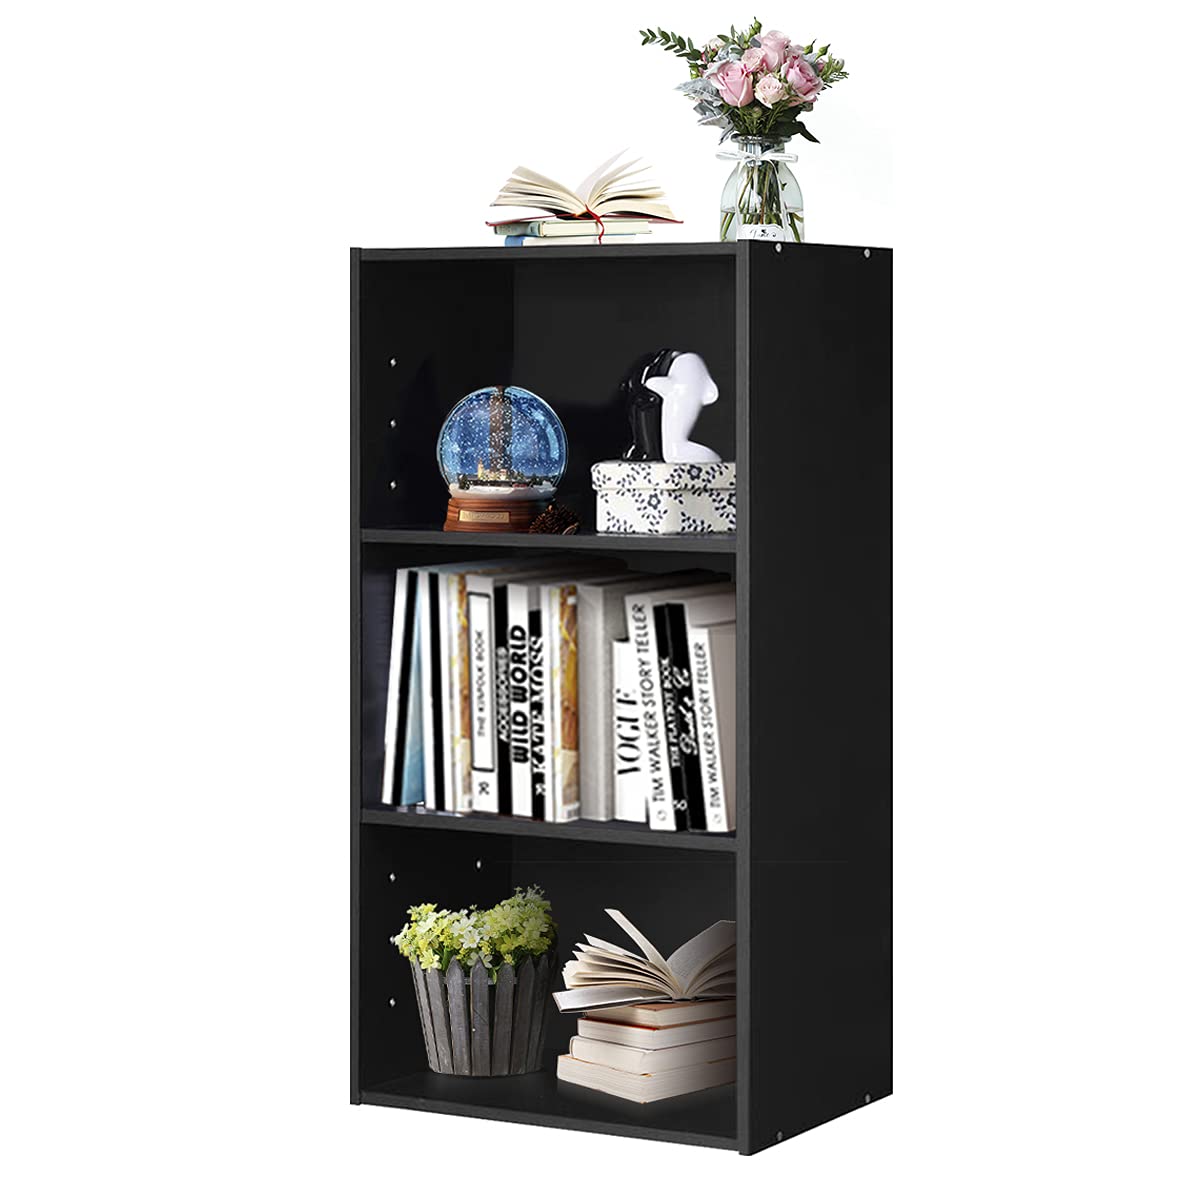 3 Shelf Bookcase Book Shelves Open Storage Cabinet